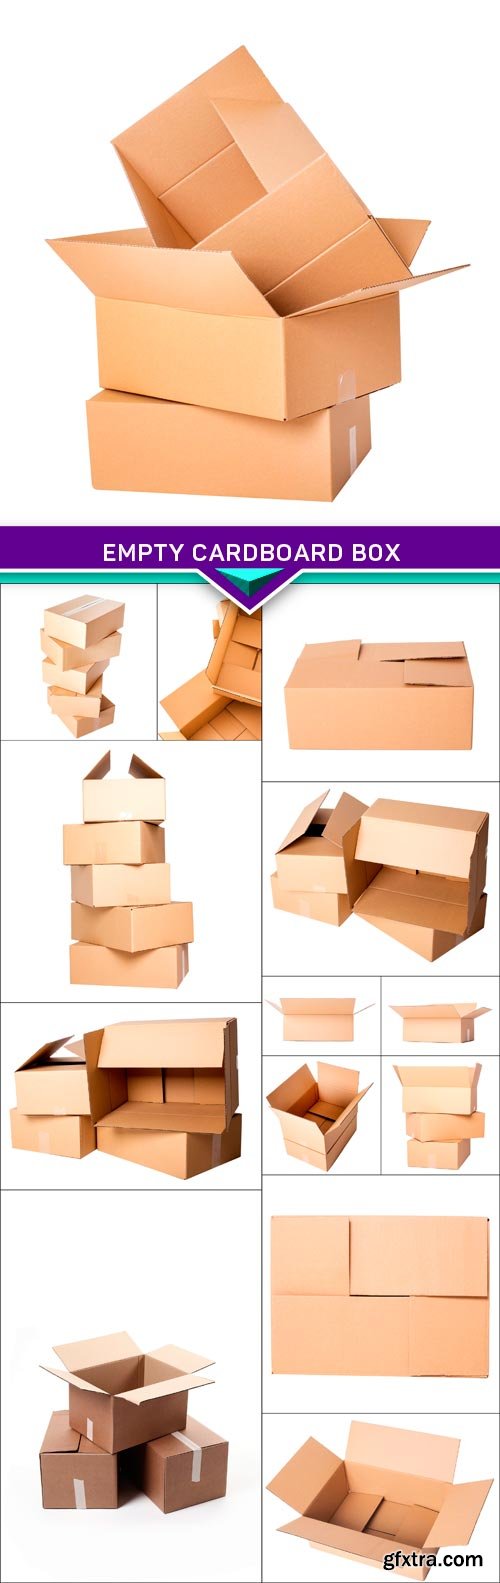 Empty cardboard box 14x JPEG